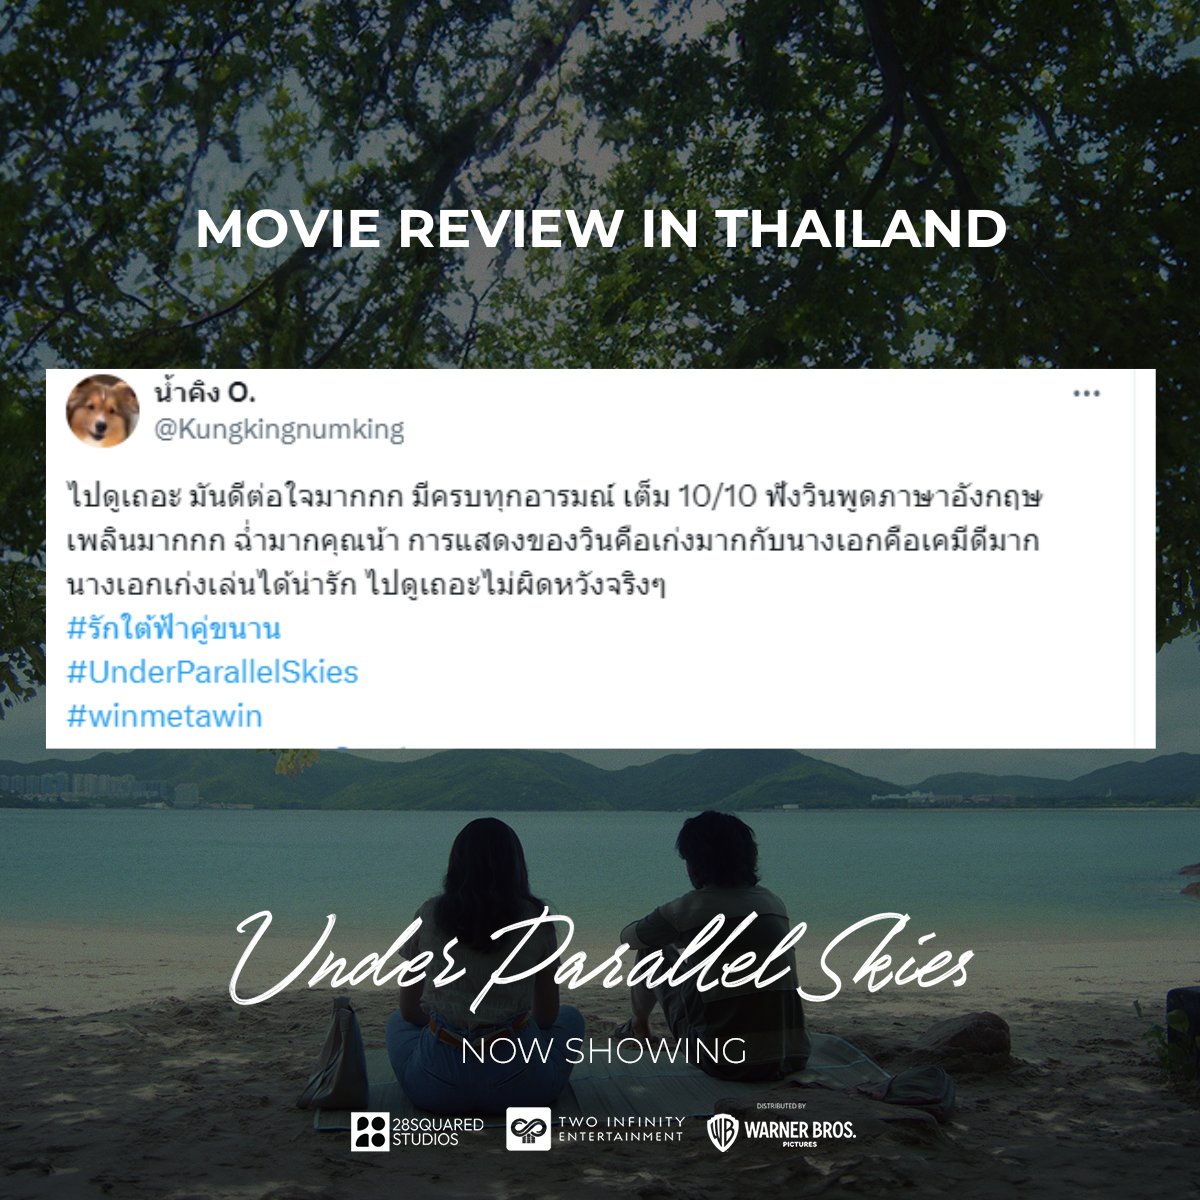 MOVIE REVIEWS ON #UNDERPARALLELSKIES IN THAILAND

ร่วมสัมผัสประสบการณ์ การเดินทางแห่งรัก และการไขว่คว้าหาความสุข.

นำแสดงโดย วิน เมธวิน และ เจเนลลา ซัลวาดอร์ รับชม 'รักใต้ฟ้าคู่ขนาน - Under Parallel Skies' ได้แล้ววันนี้ในโรงภาพยนตร์ทั่วประเทศ! #UnderParallelSkies #WinMetawin…